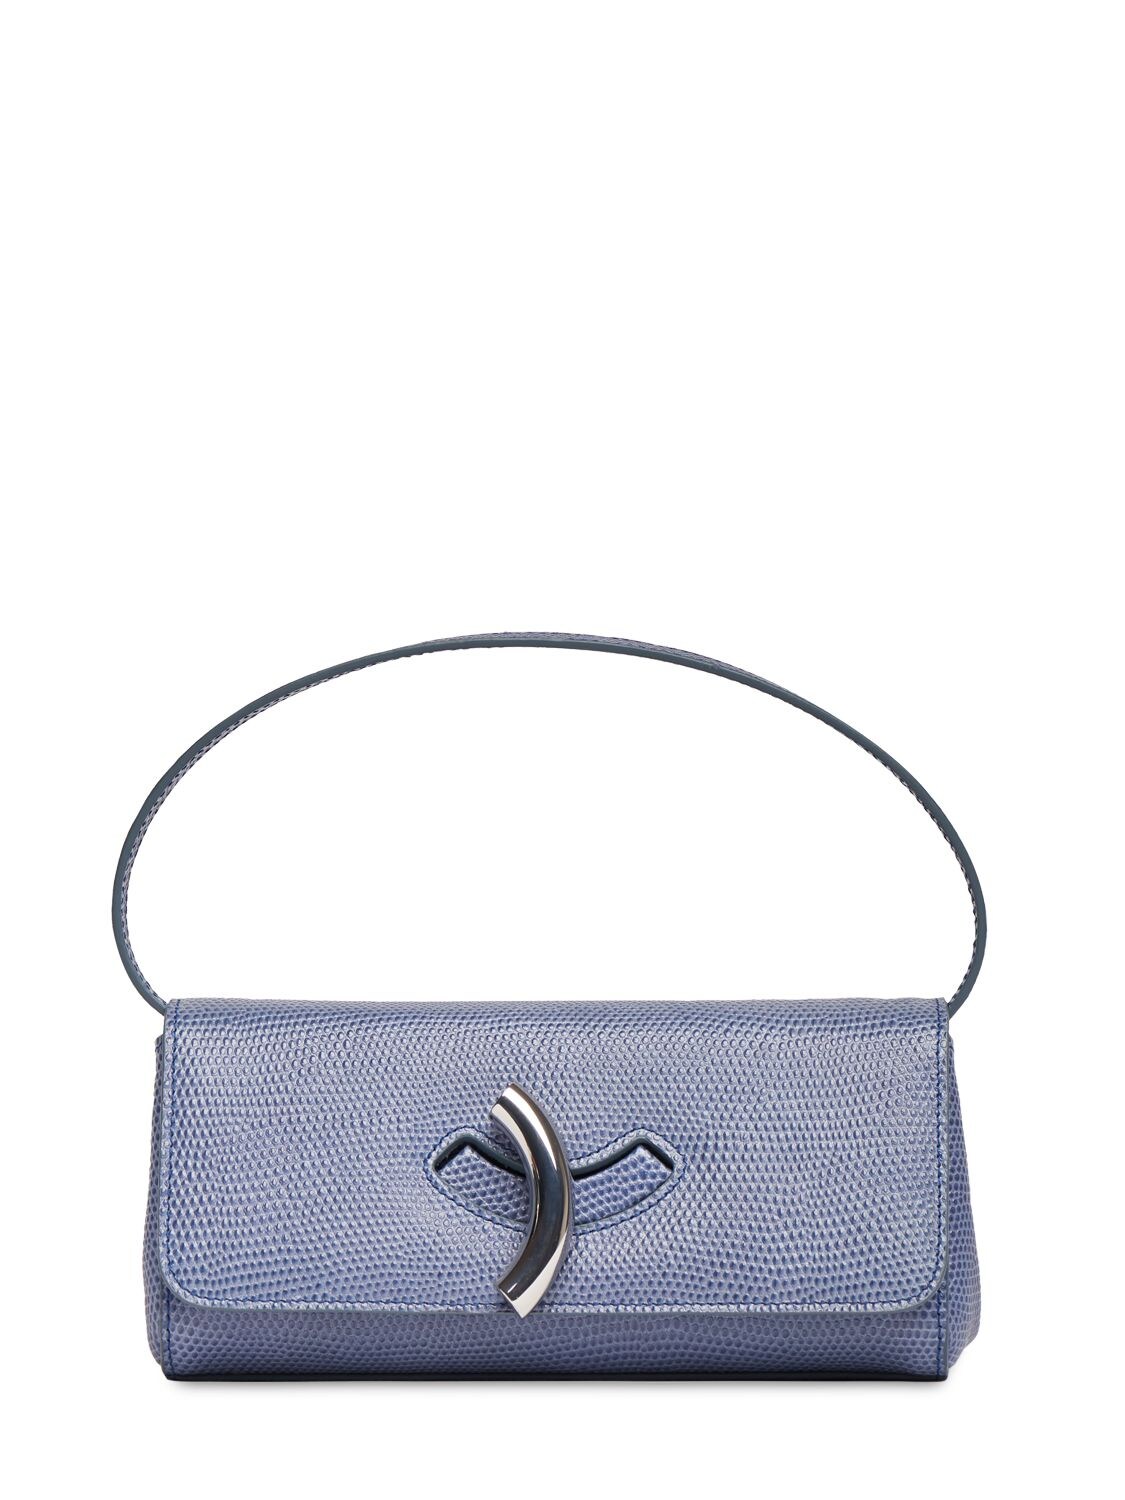 Little Liffner Mini Maccheroni Embossed Leather Bag In Violet Blue